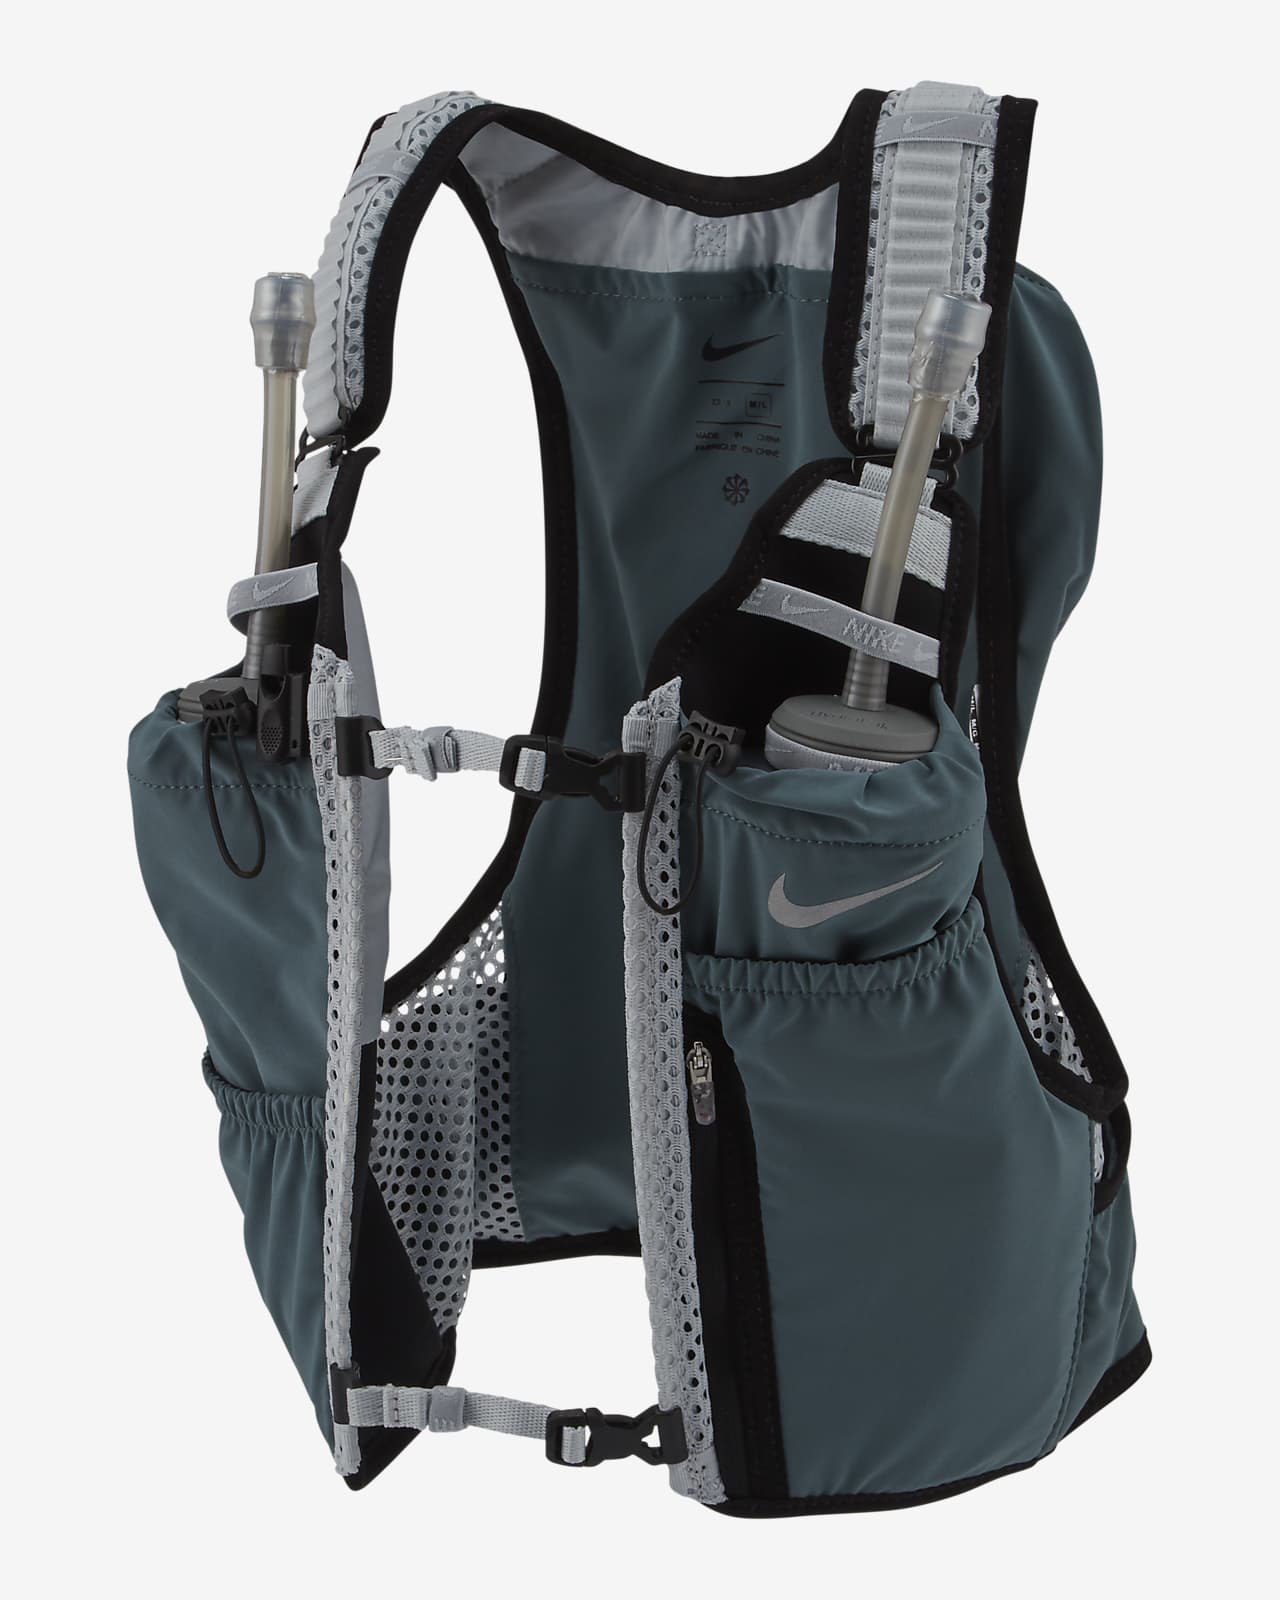 Vest 4. Жилет Nike Trail. Nike Trail Running Terra Kiger Vest. Nike transform Vest Pack. JTC d06l жилет.